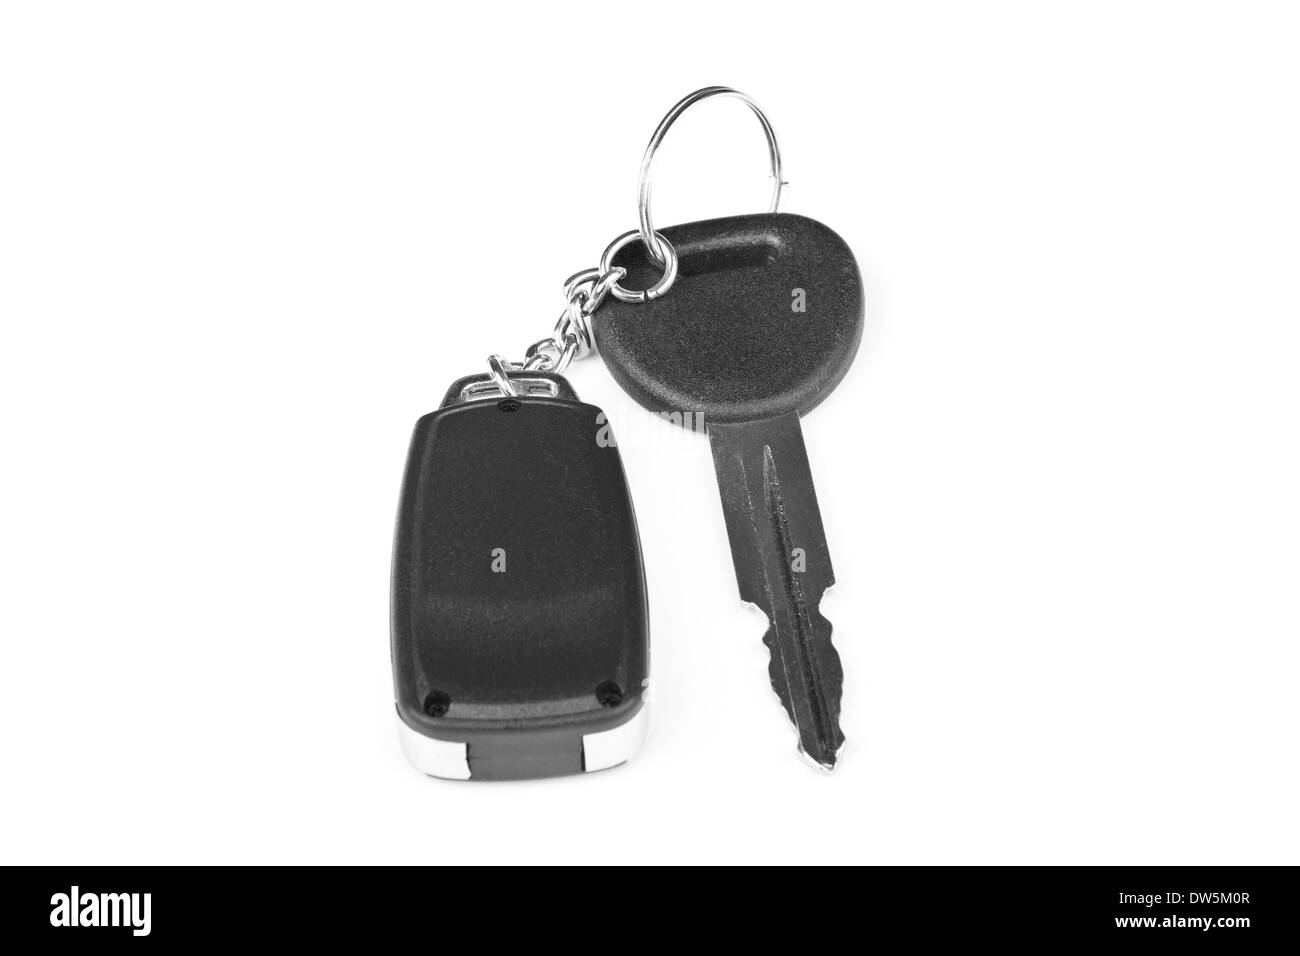 key with car alarm isolated on white Stock Photo